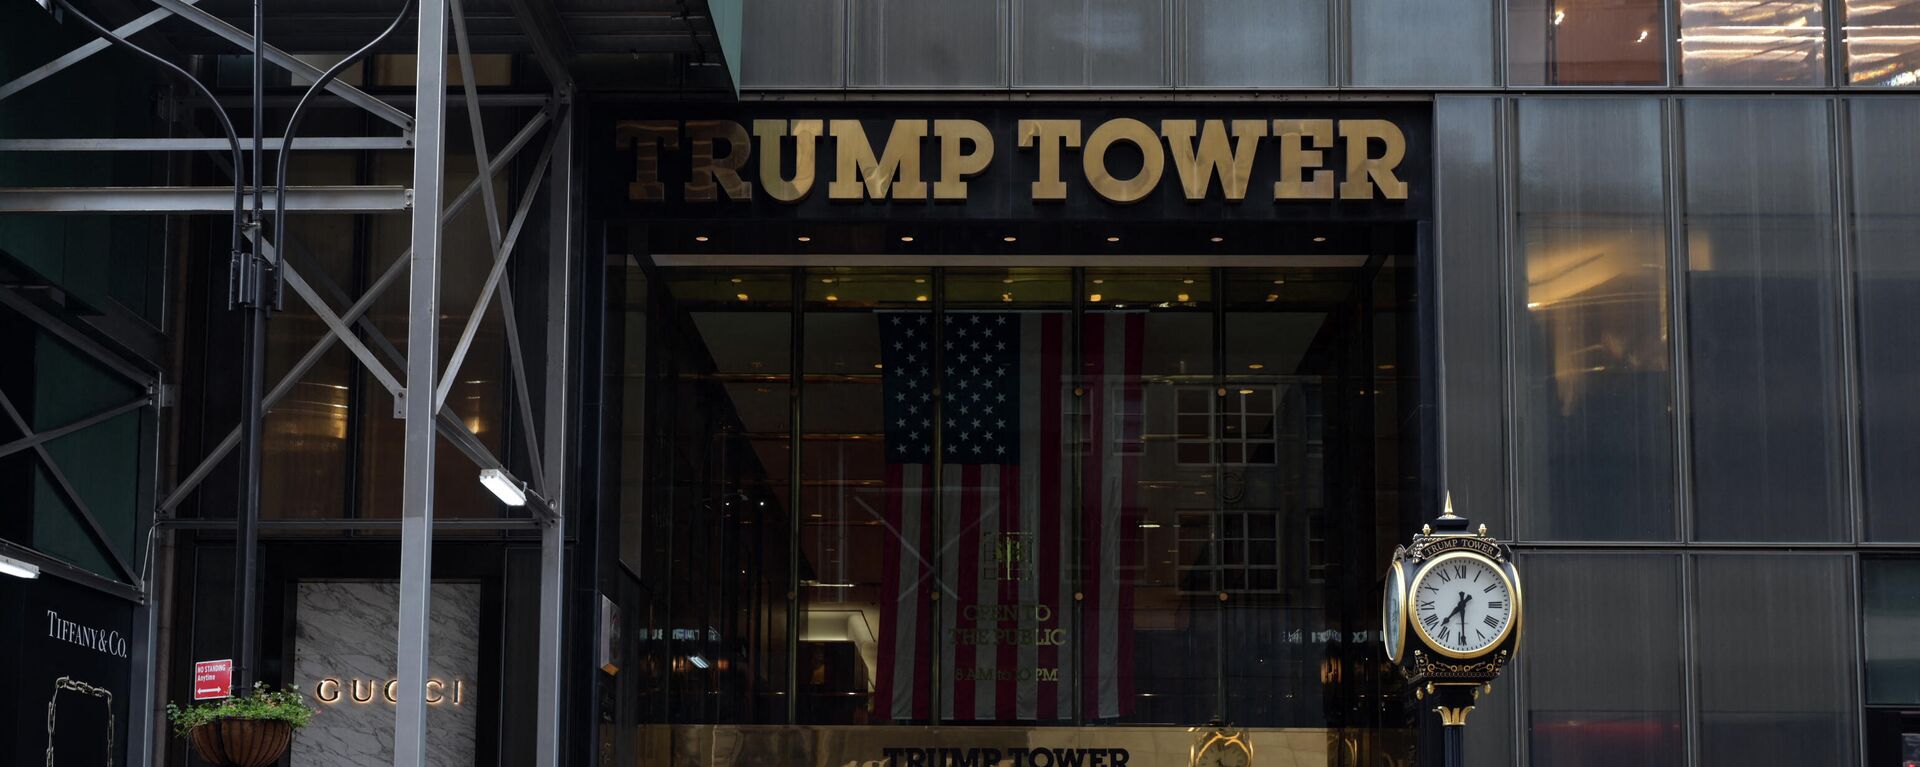 Traffic drives past the Trump Tower building in Manhattan, on July 1, 2021 in New York. - Sputnik International, 1920, 22.11.2021